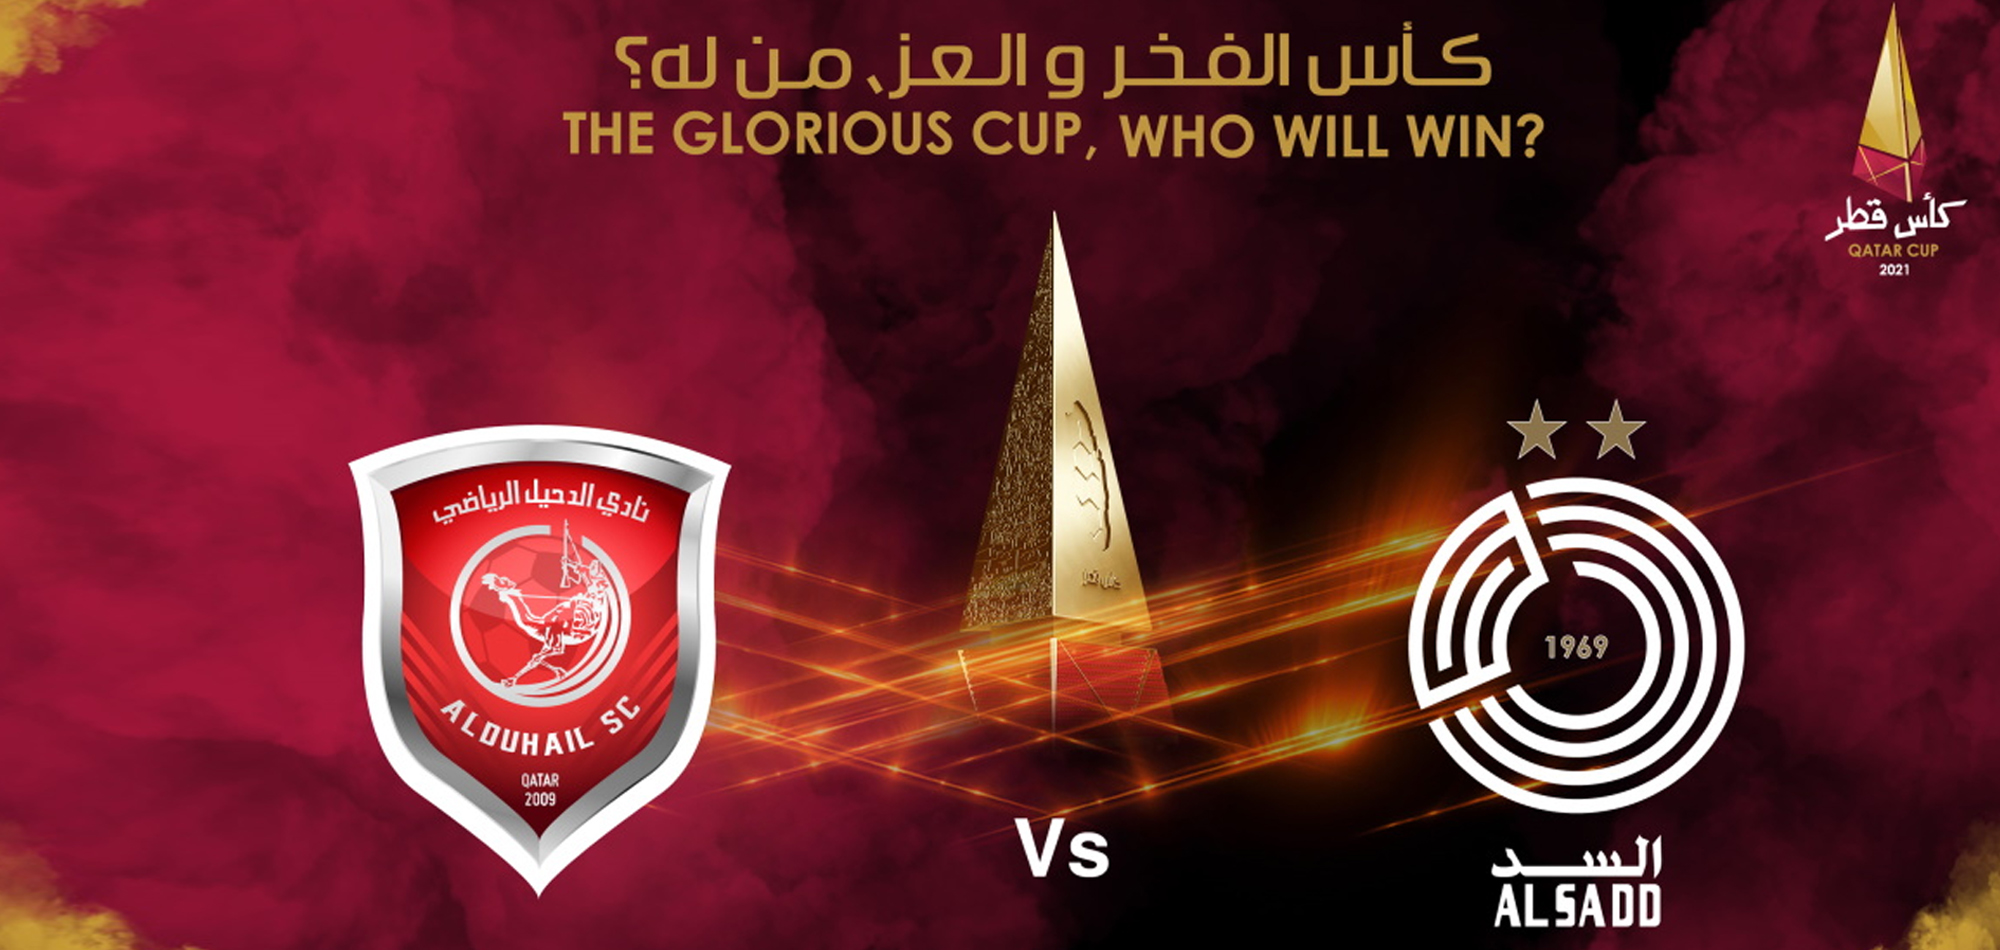 Qatar Stars League Holds Co-ordination Meeting Ahead of Qatar Cup 2021 Final